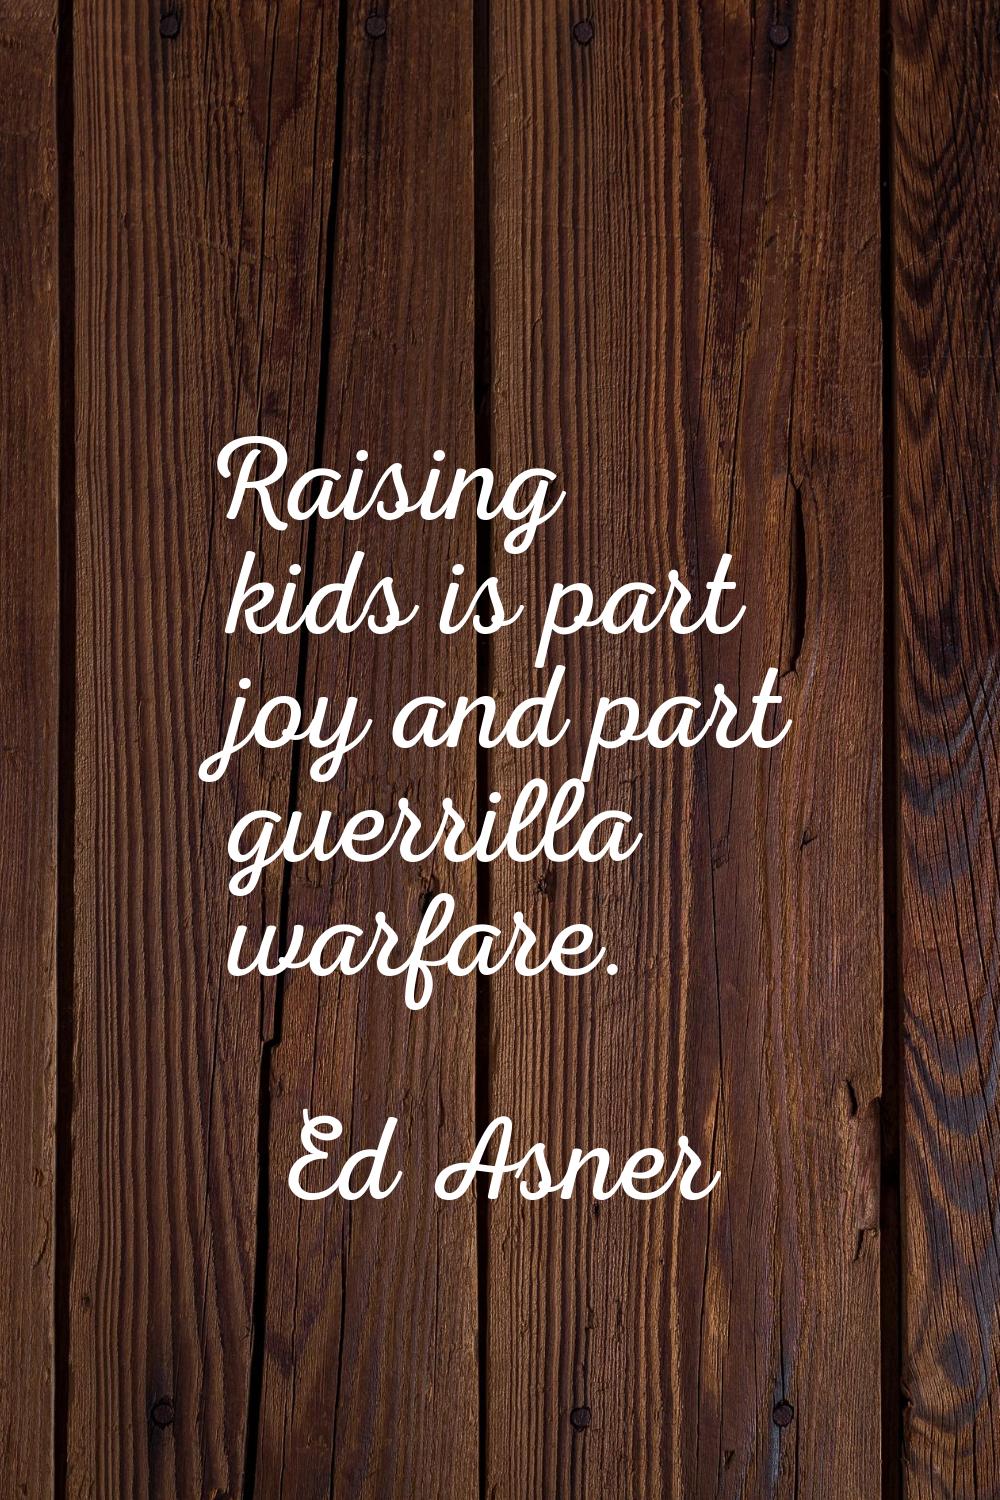 Raising kids is part joy and part guerrilla warfare.